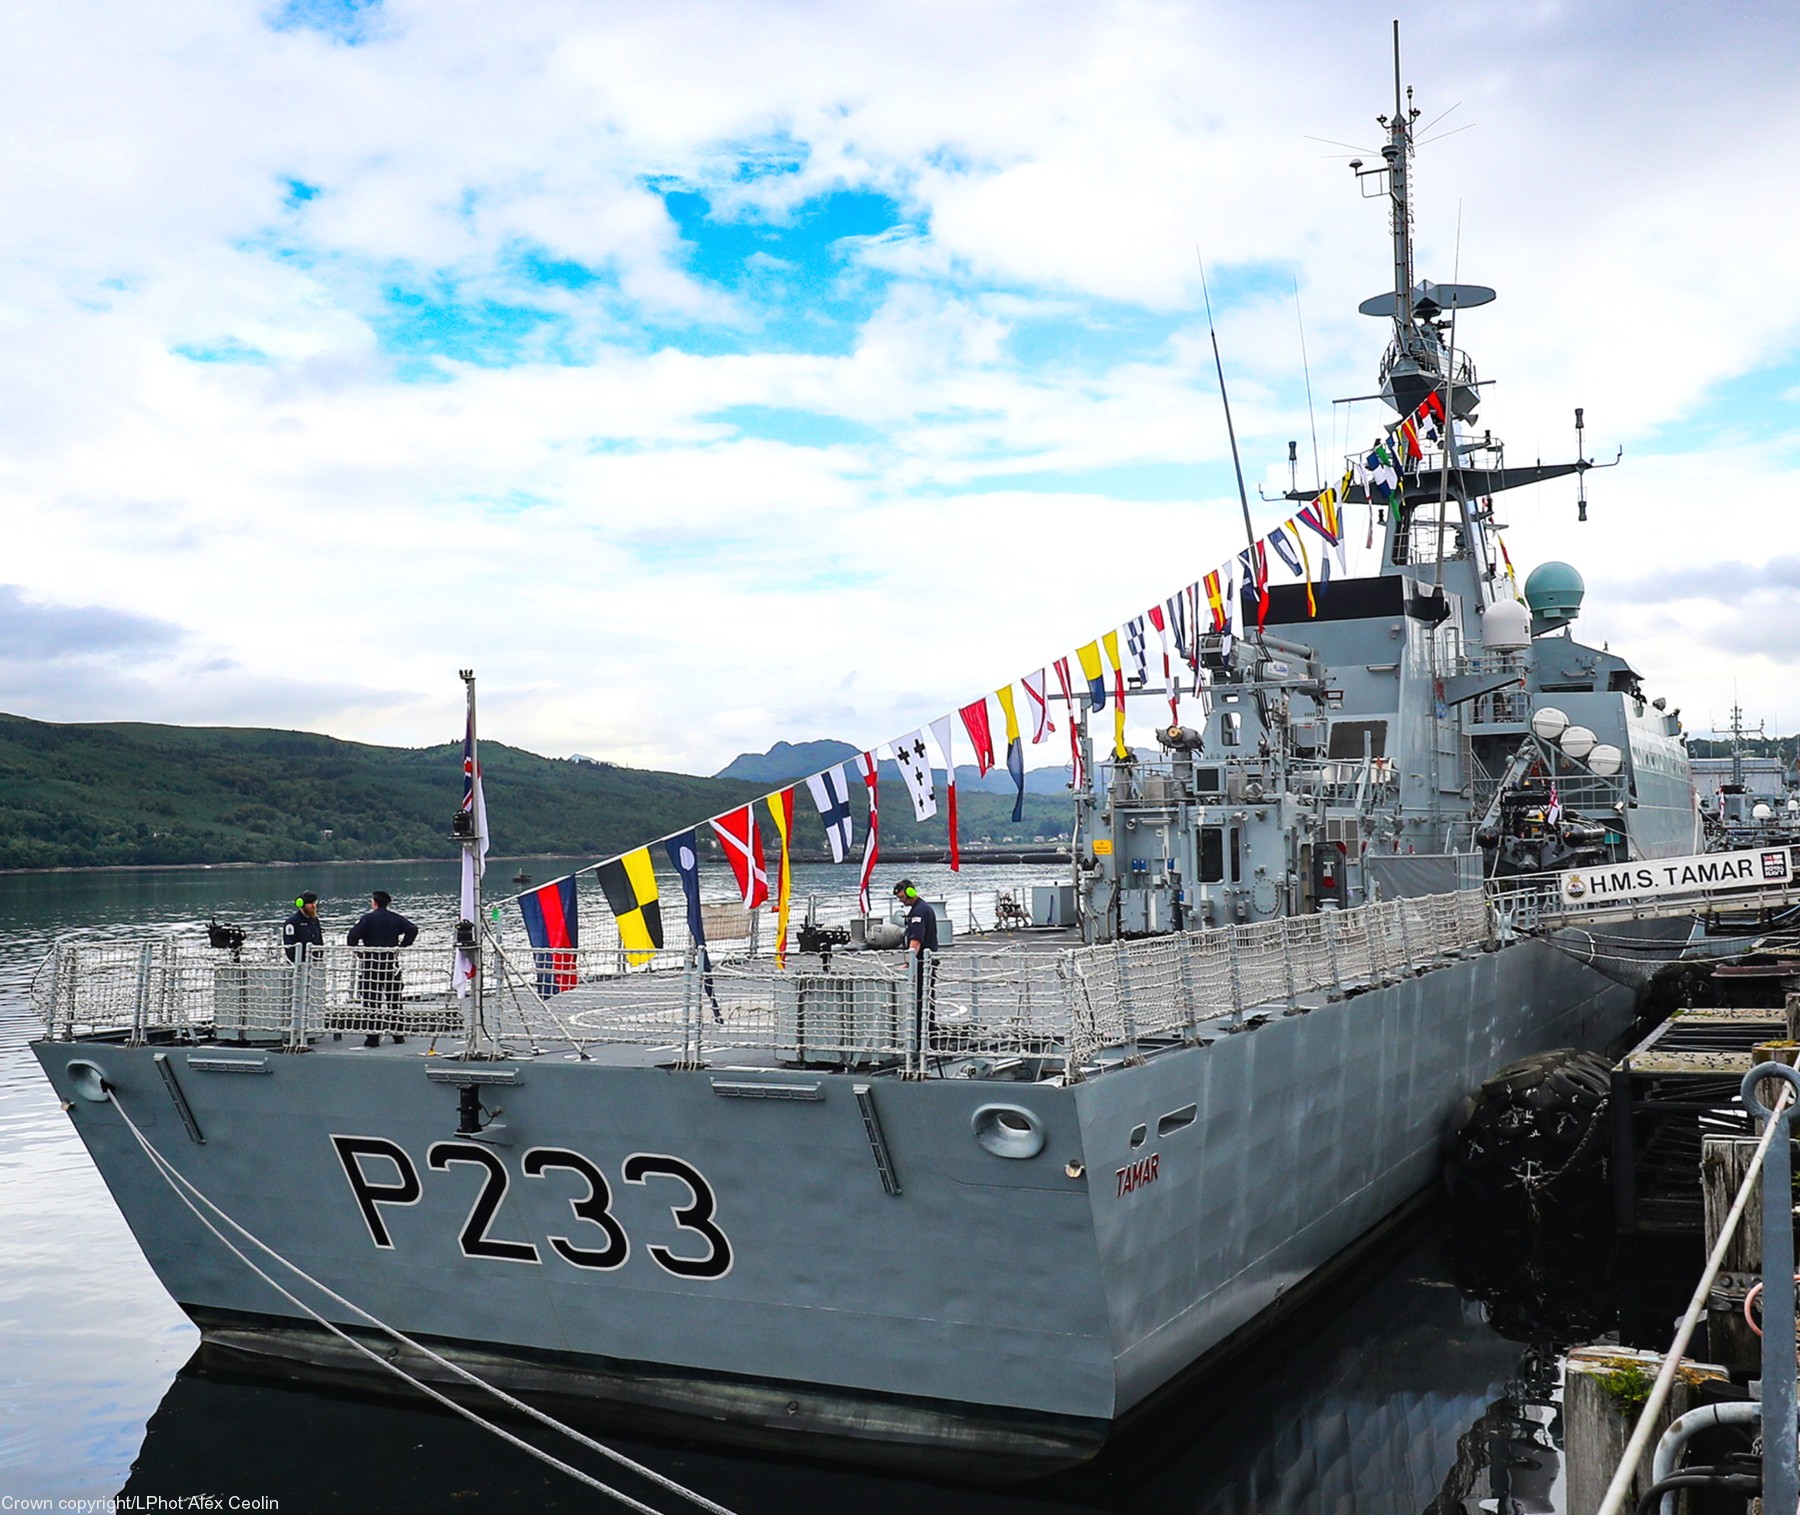 p233 hms tamar river class offshore patrol vessel opv royal navy 14